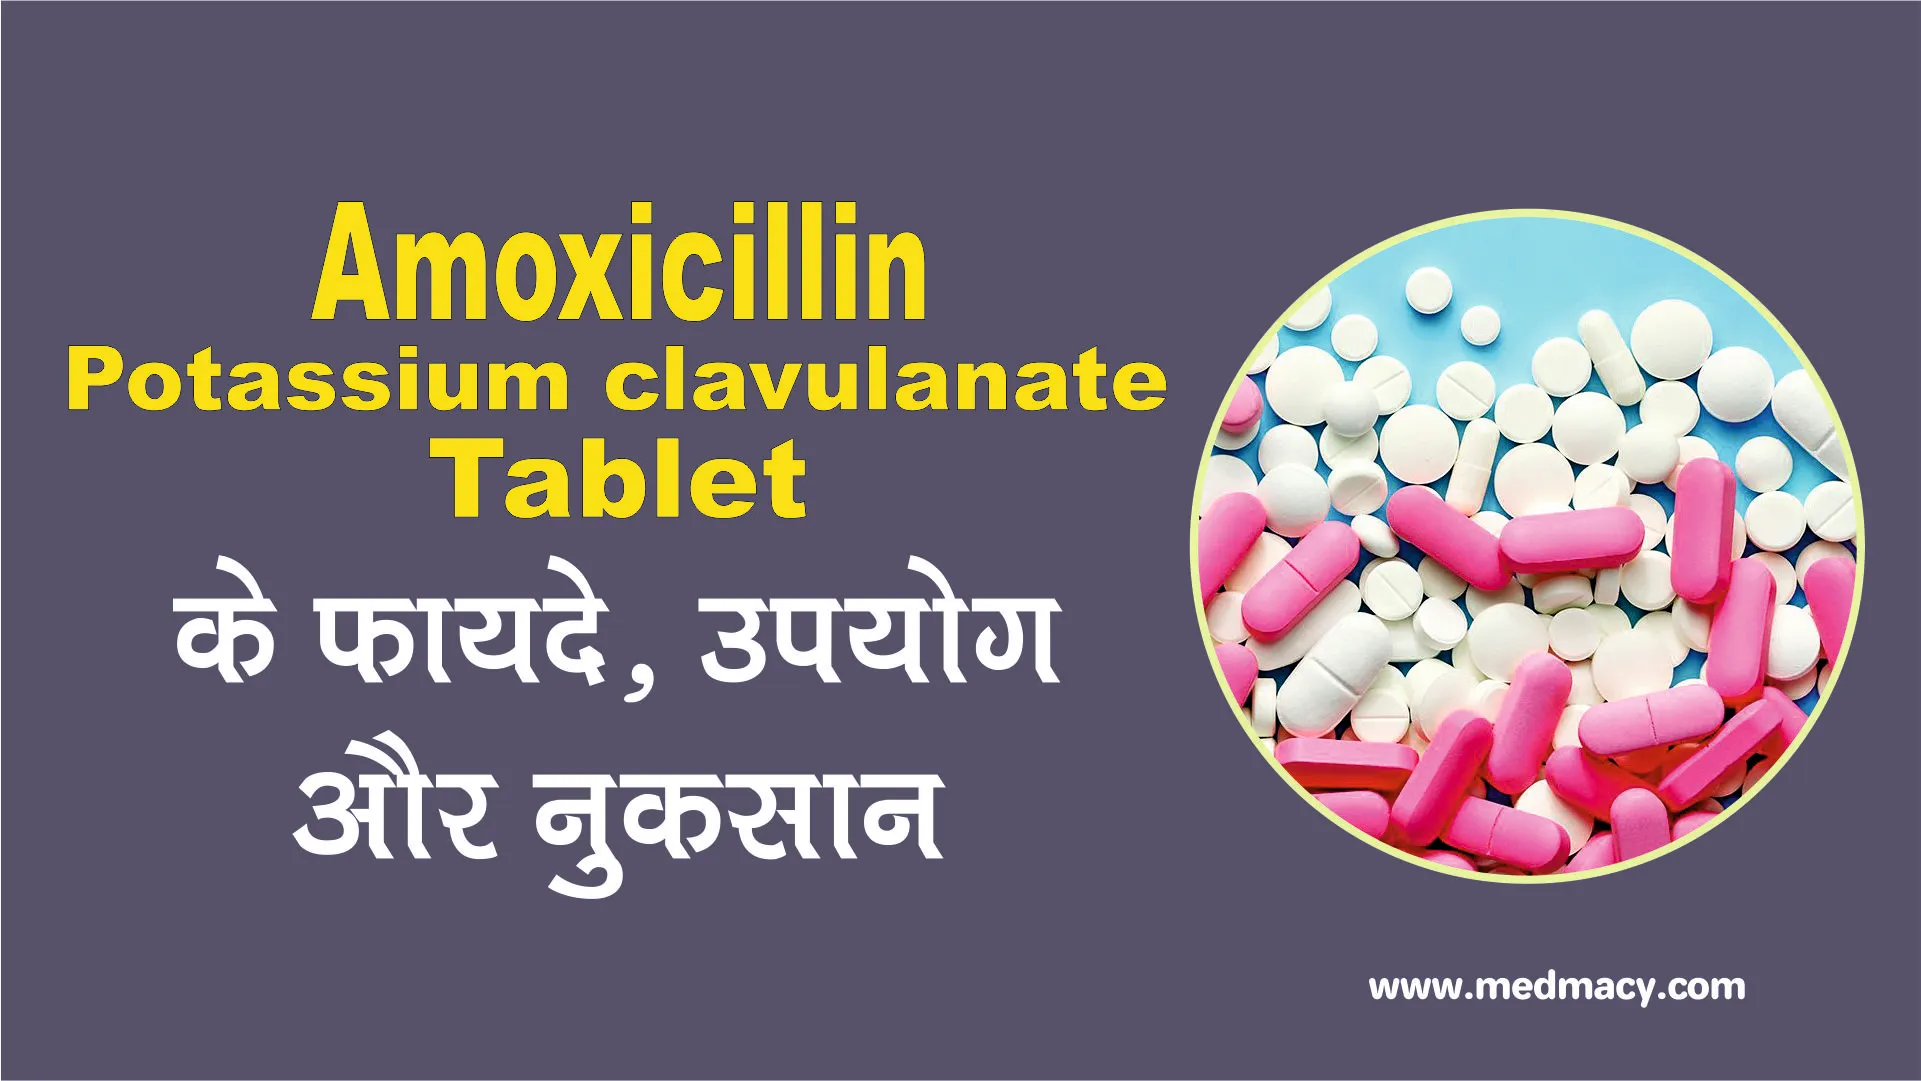 Amoxicillin Potassium Clavulanate Tablet Uses in Hindi